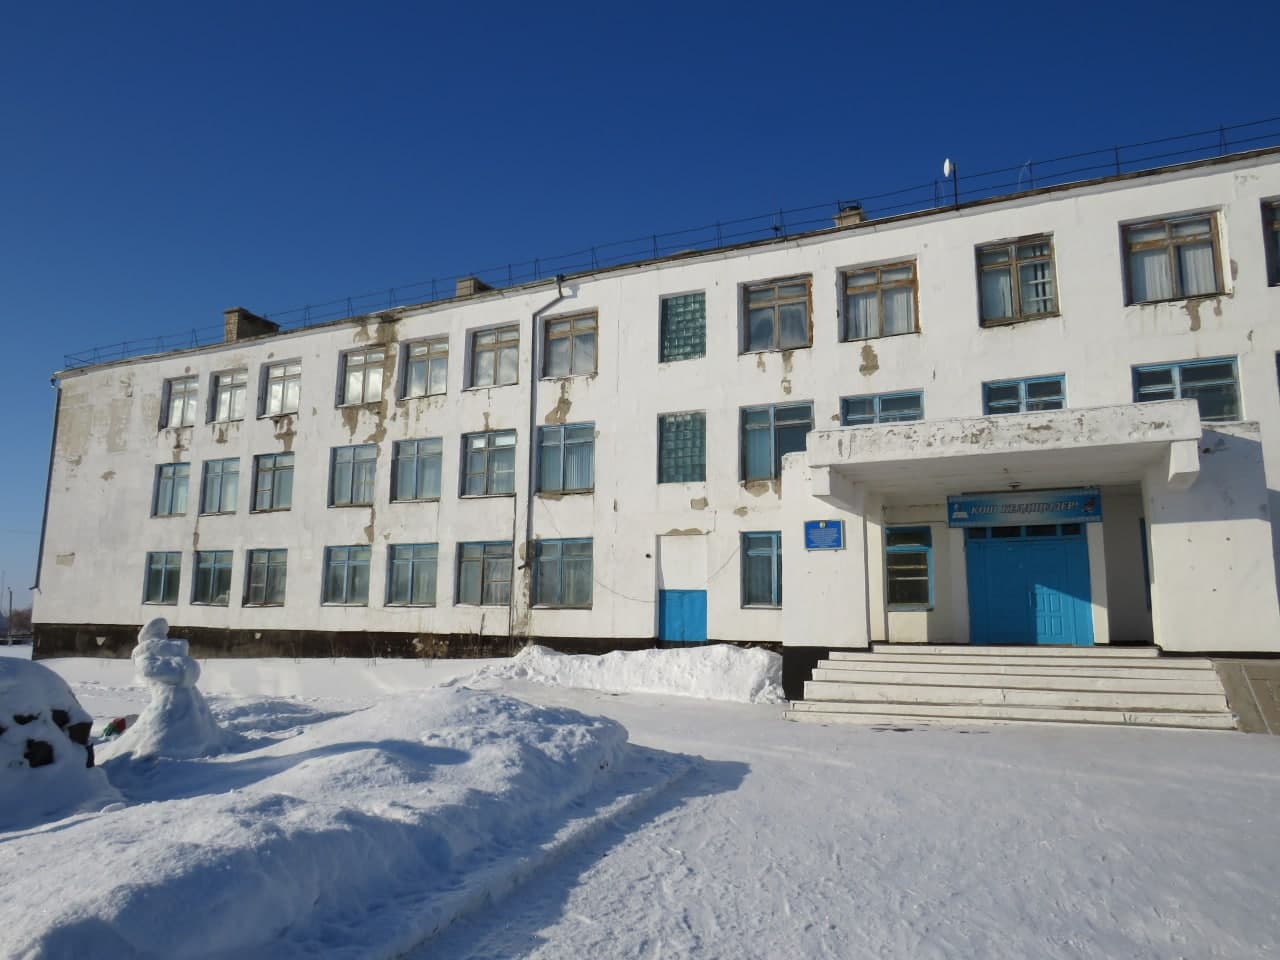 Киши-Караой. Цветущая школа на севере Казахстана